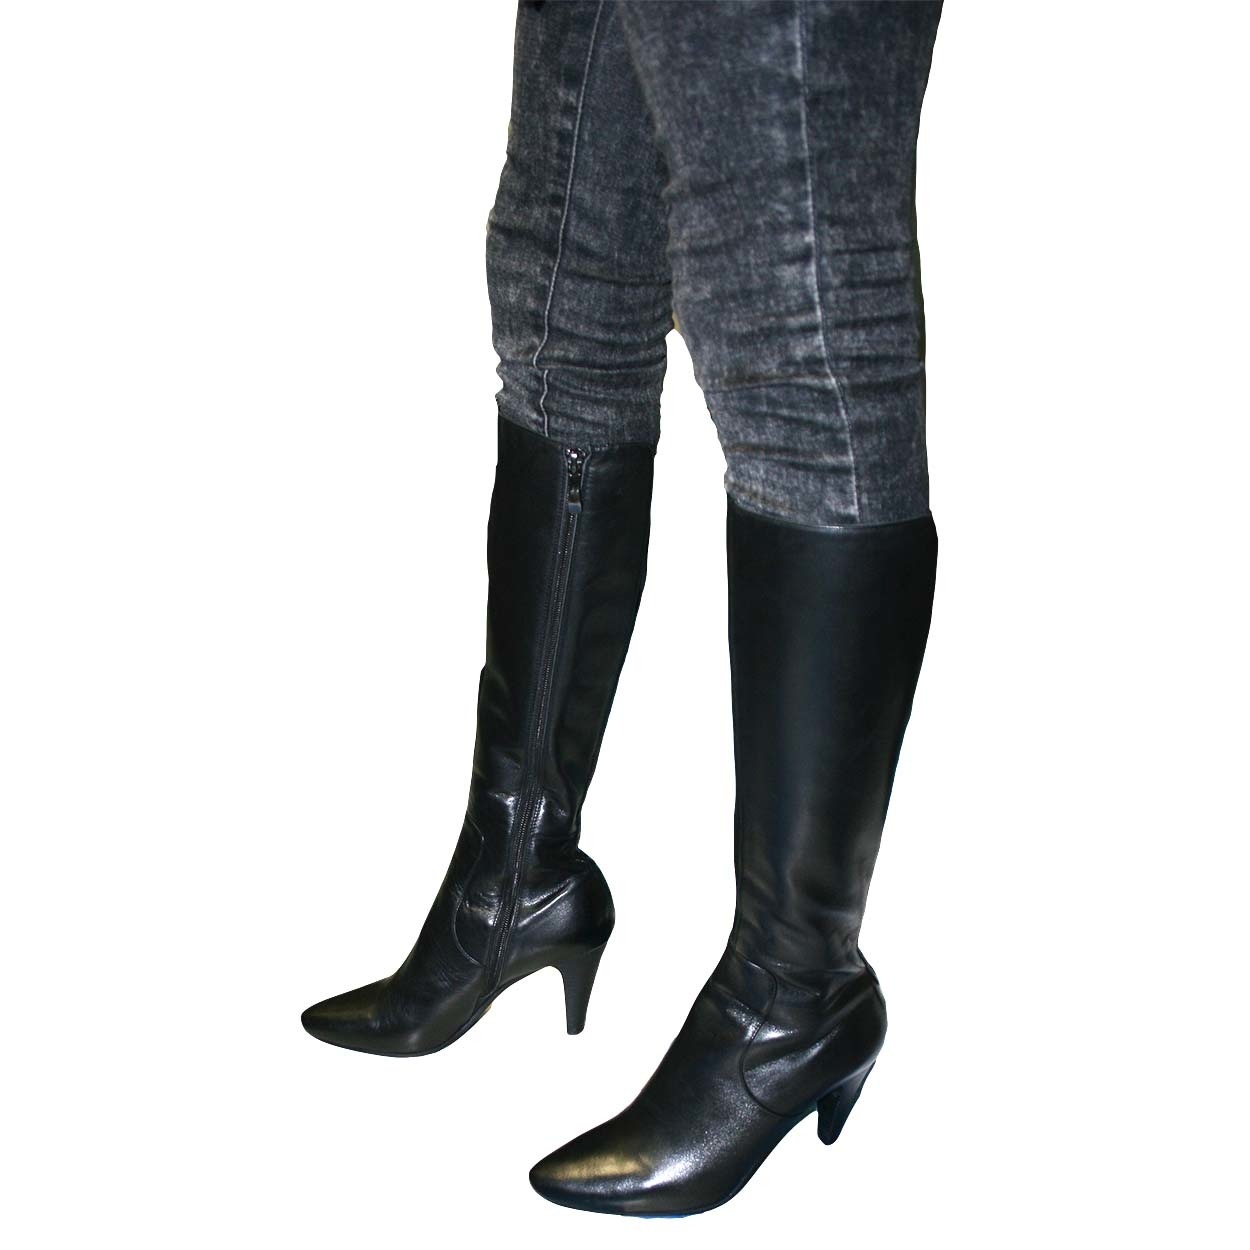 slim calf dress boots